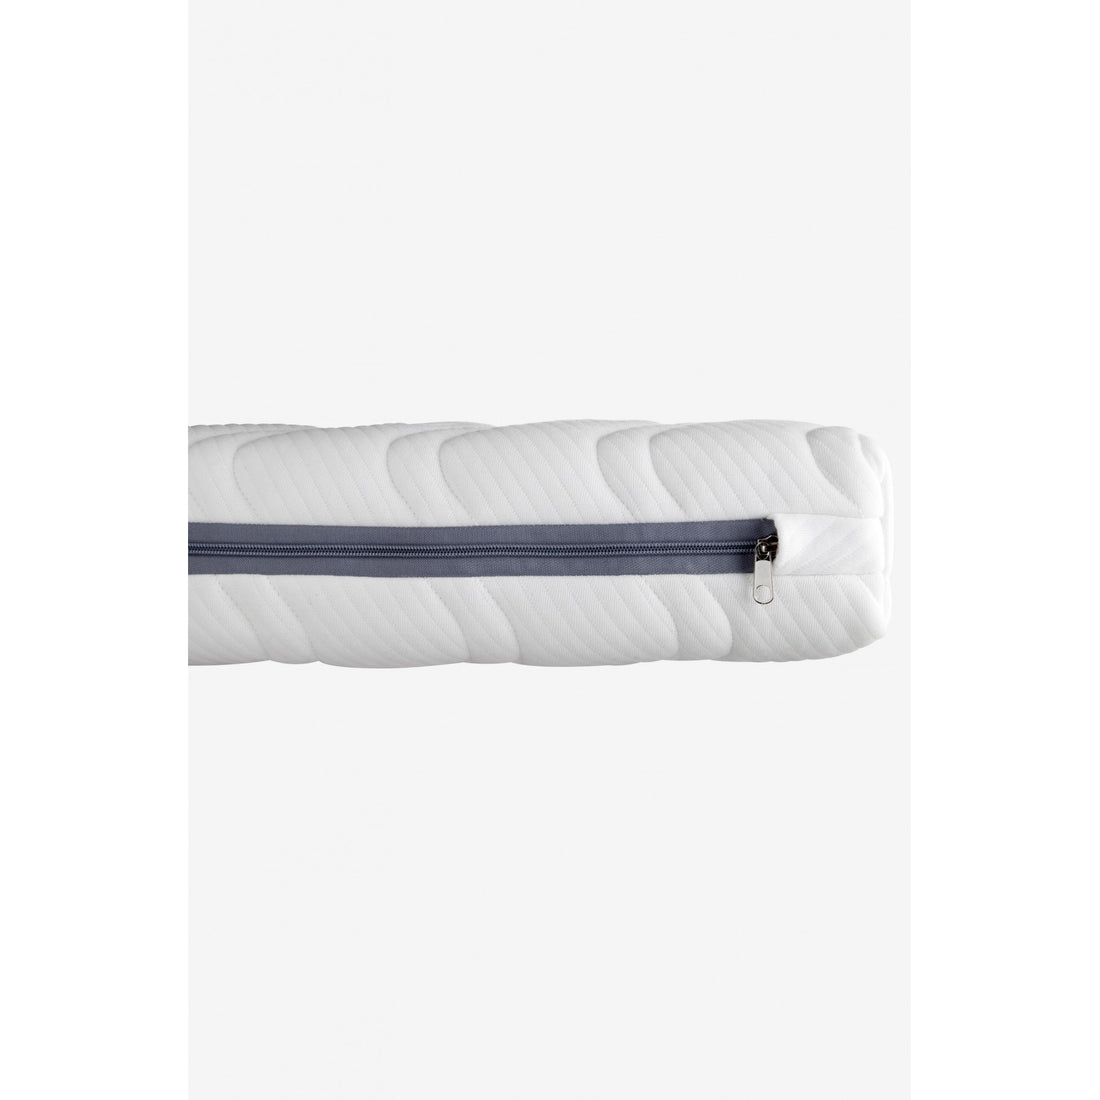 kadolis-coco-latex-baby-mattress-70x140x12cm- (3)